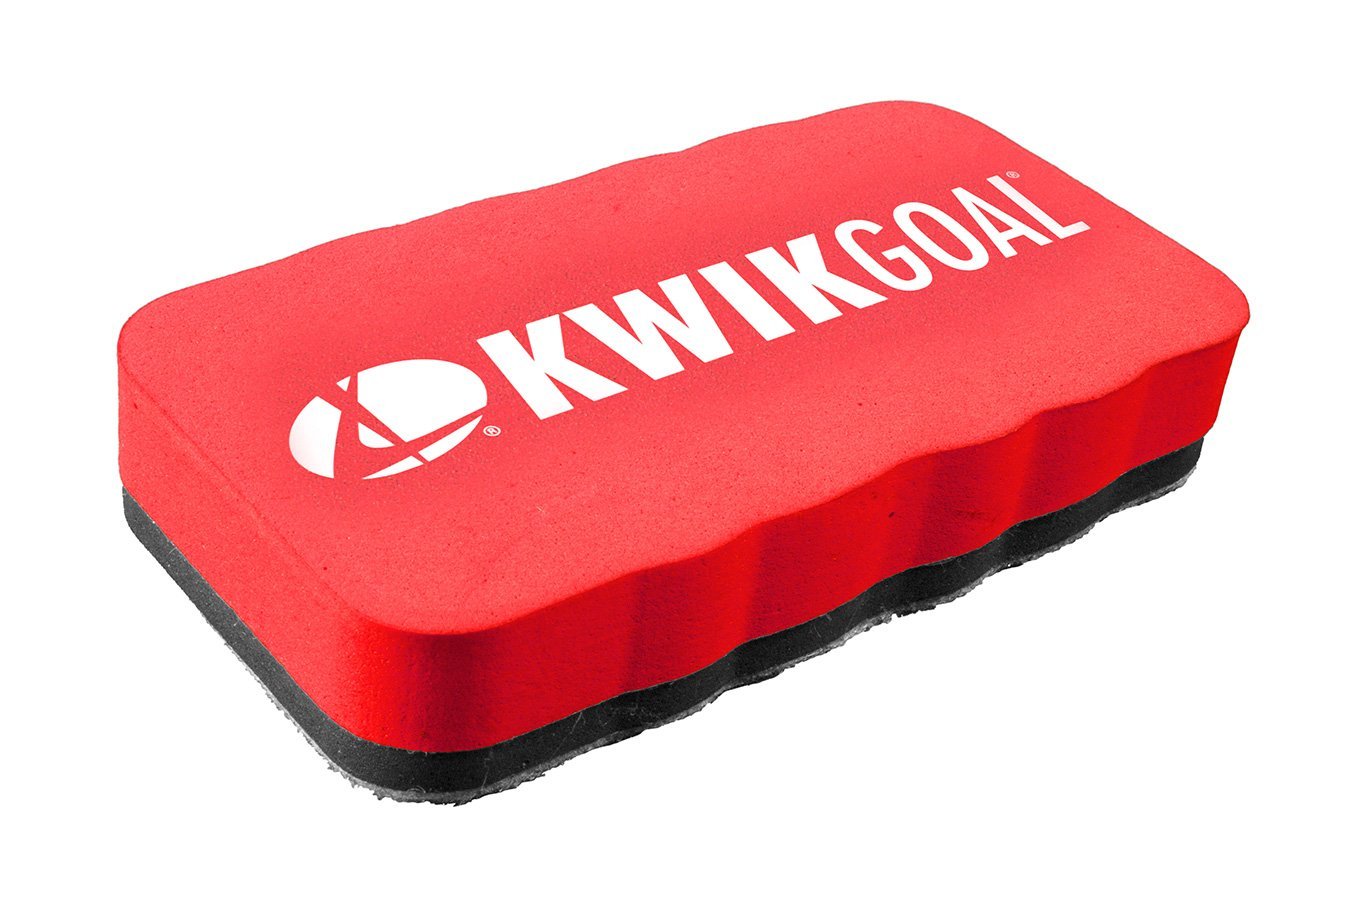 Kwikgoal Dry Erase Board | 18B1103 Training equipment Kwikgoal 